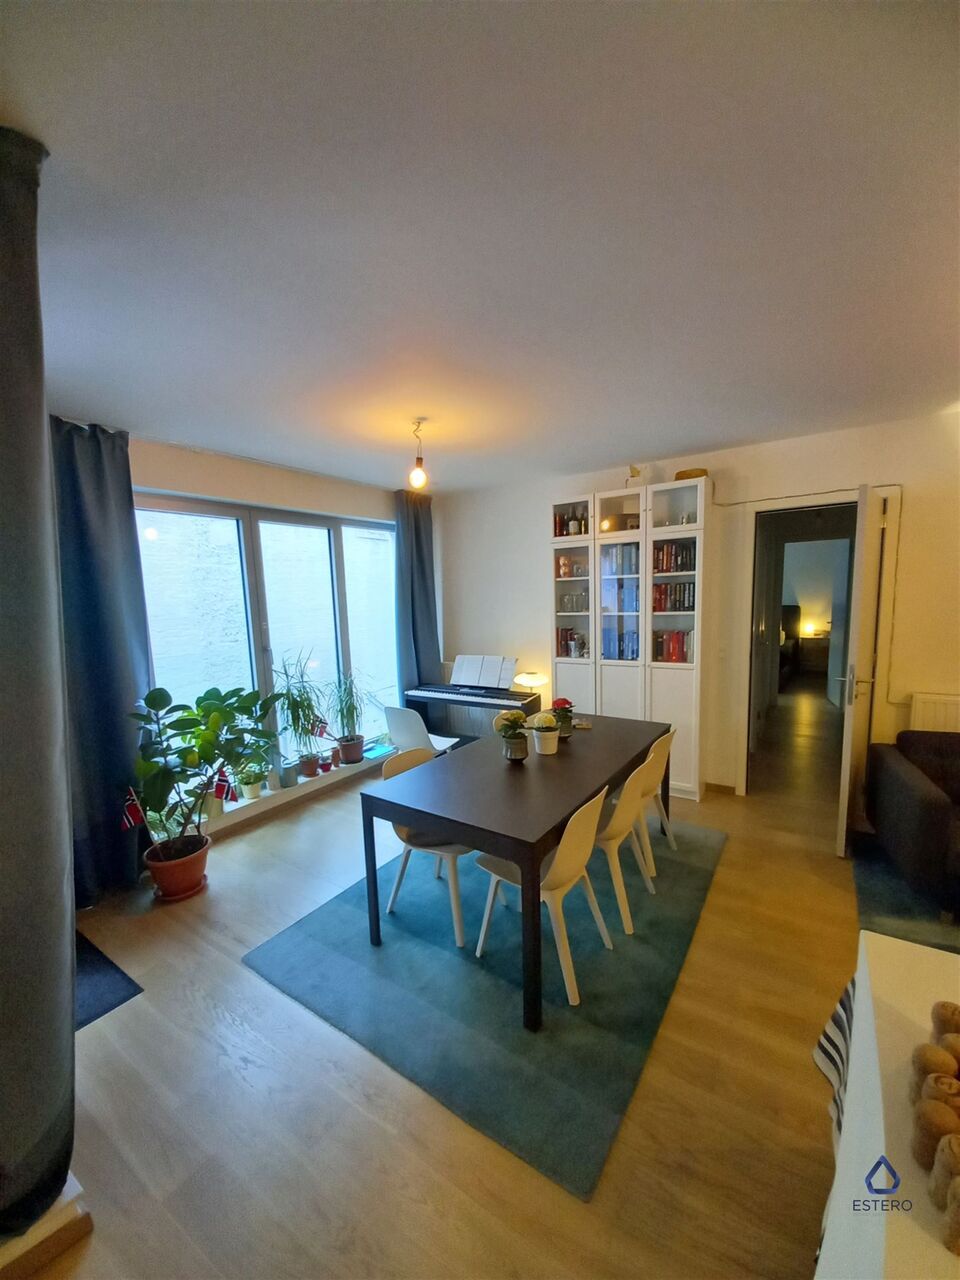 Modern appartement met terras in hartje Brussel foto 4